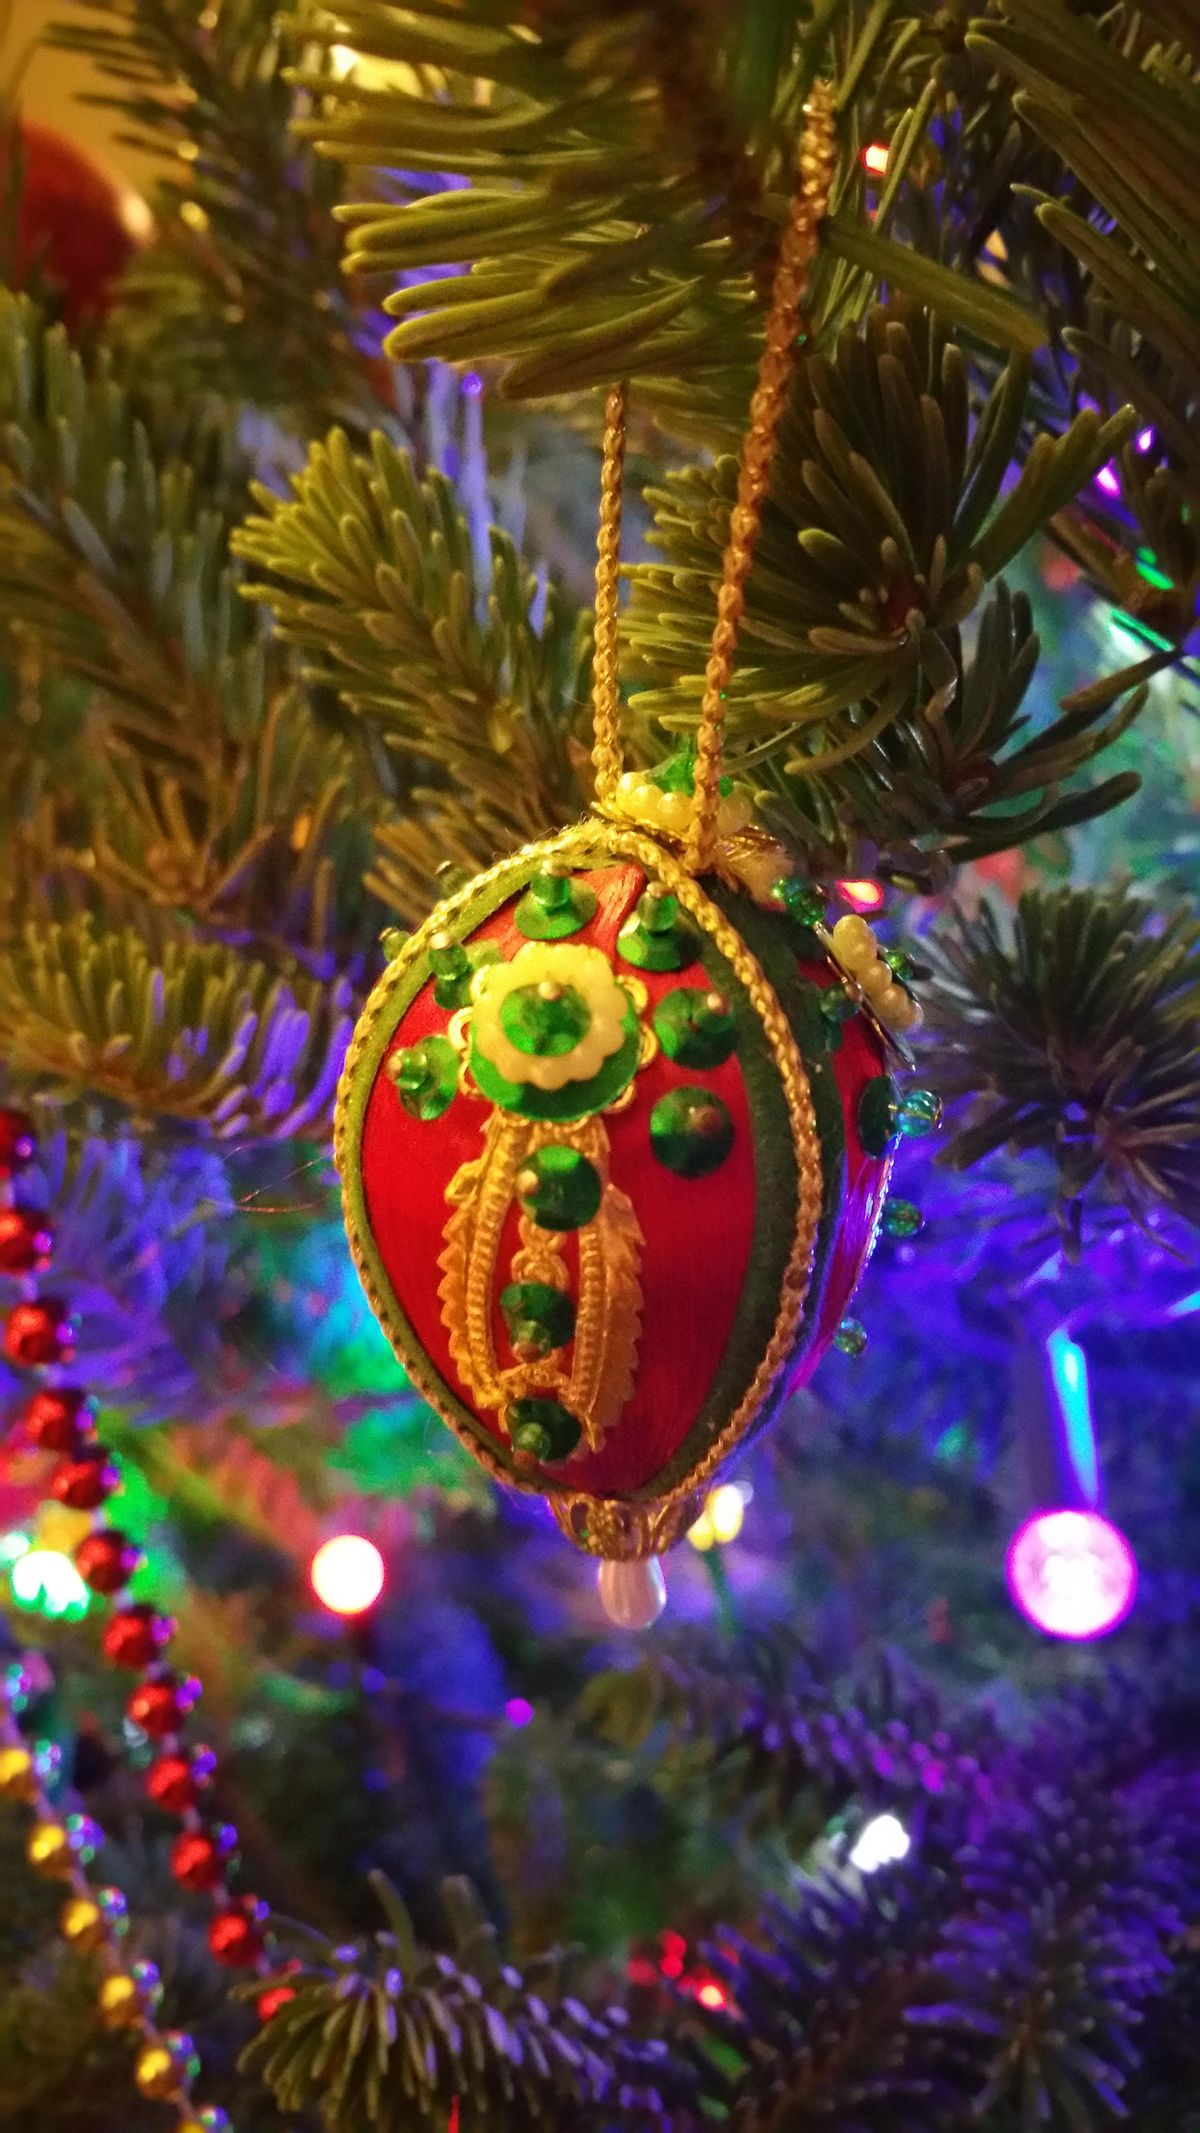 Favorite Christmas ornaments | The Spokesman-Review